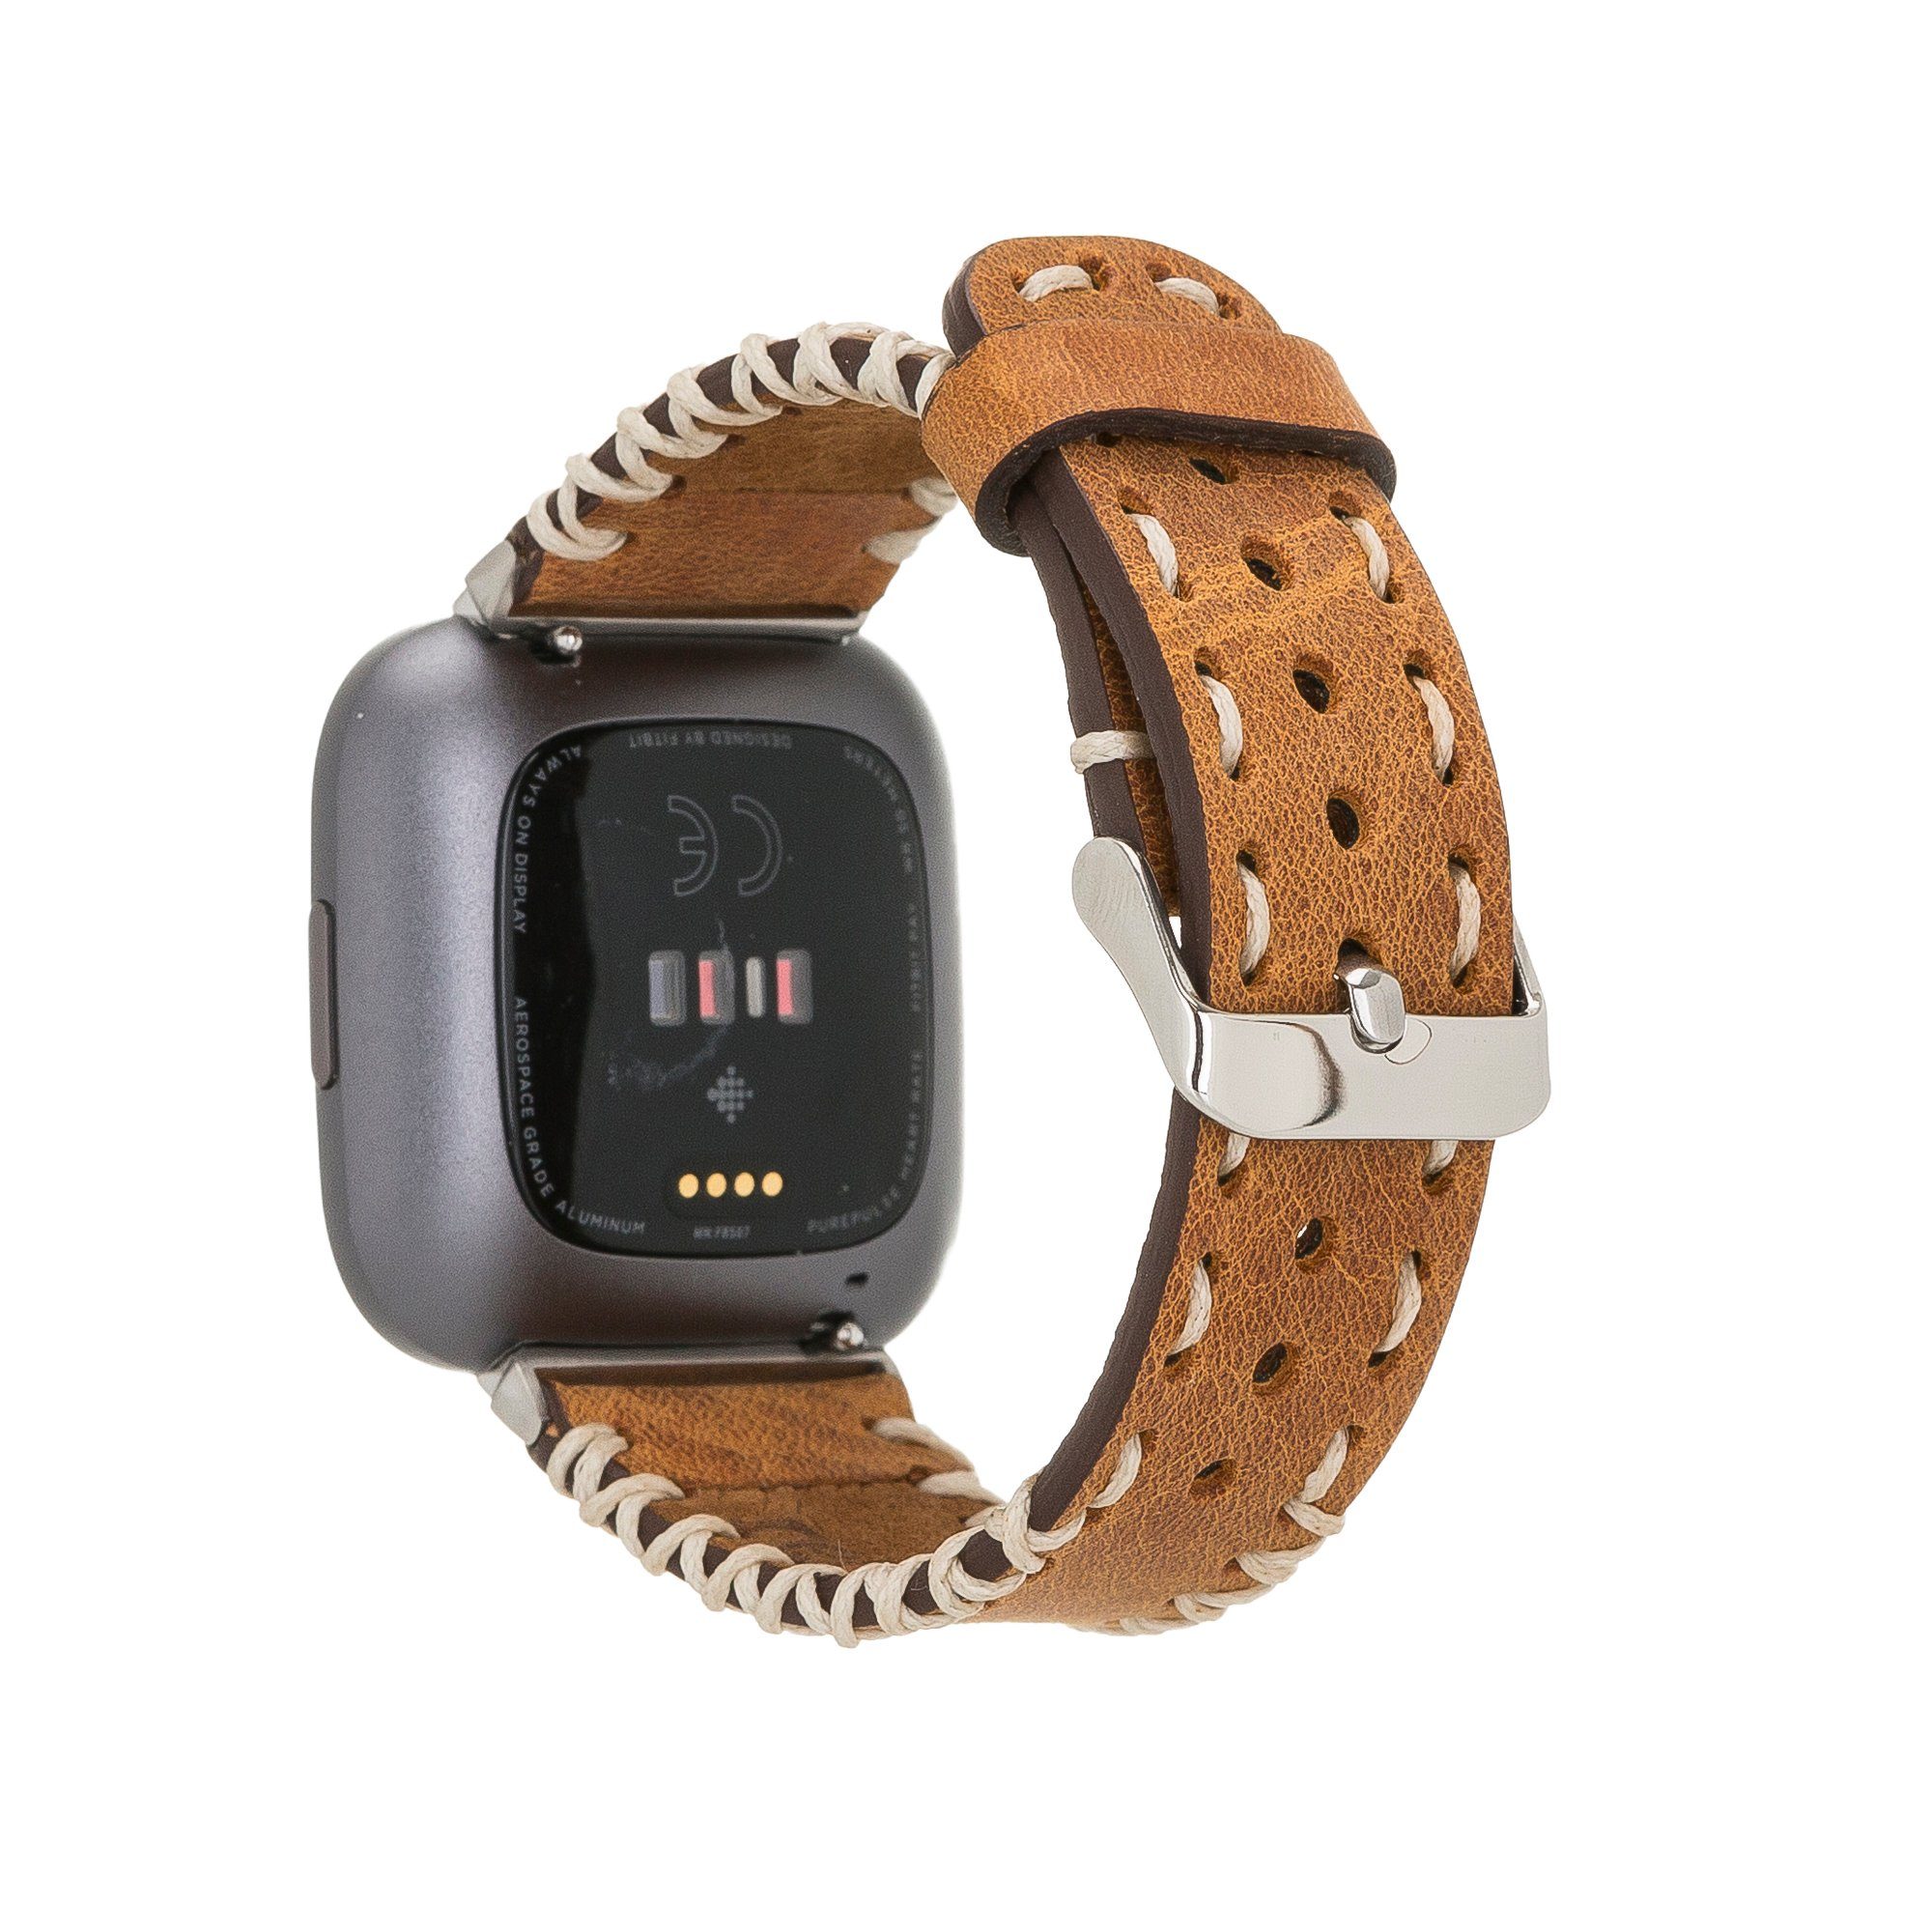 Renna Sense Smartwatch-Armband / SPORT Ersatzarmband BRAUN Armband Fitbit / 4 Versa Echtes Leder 3 Leather 2 &